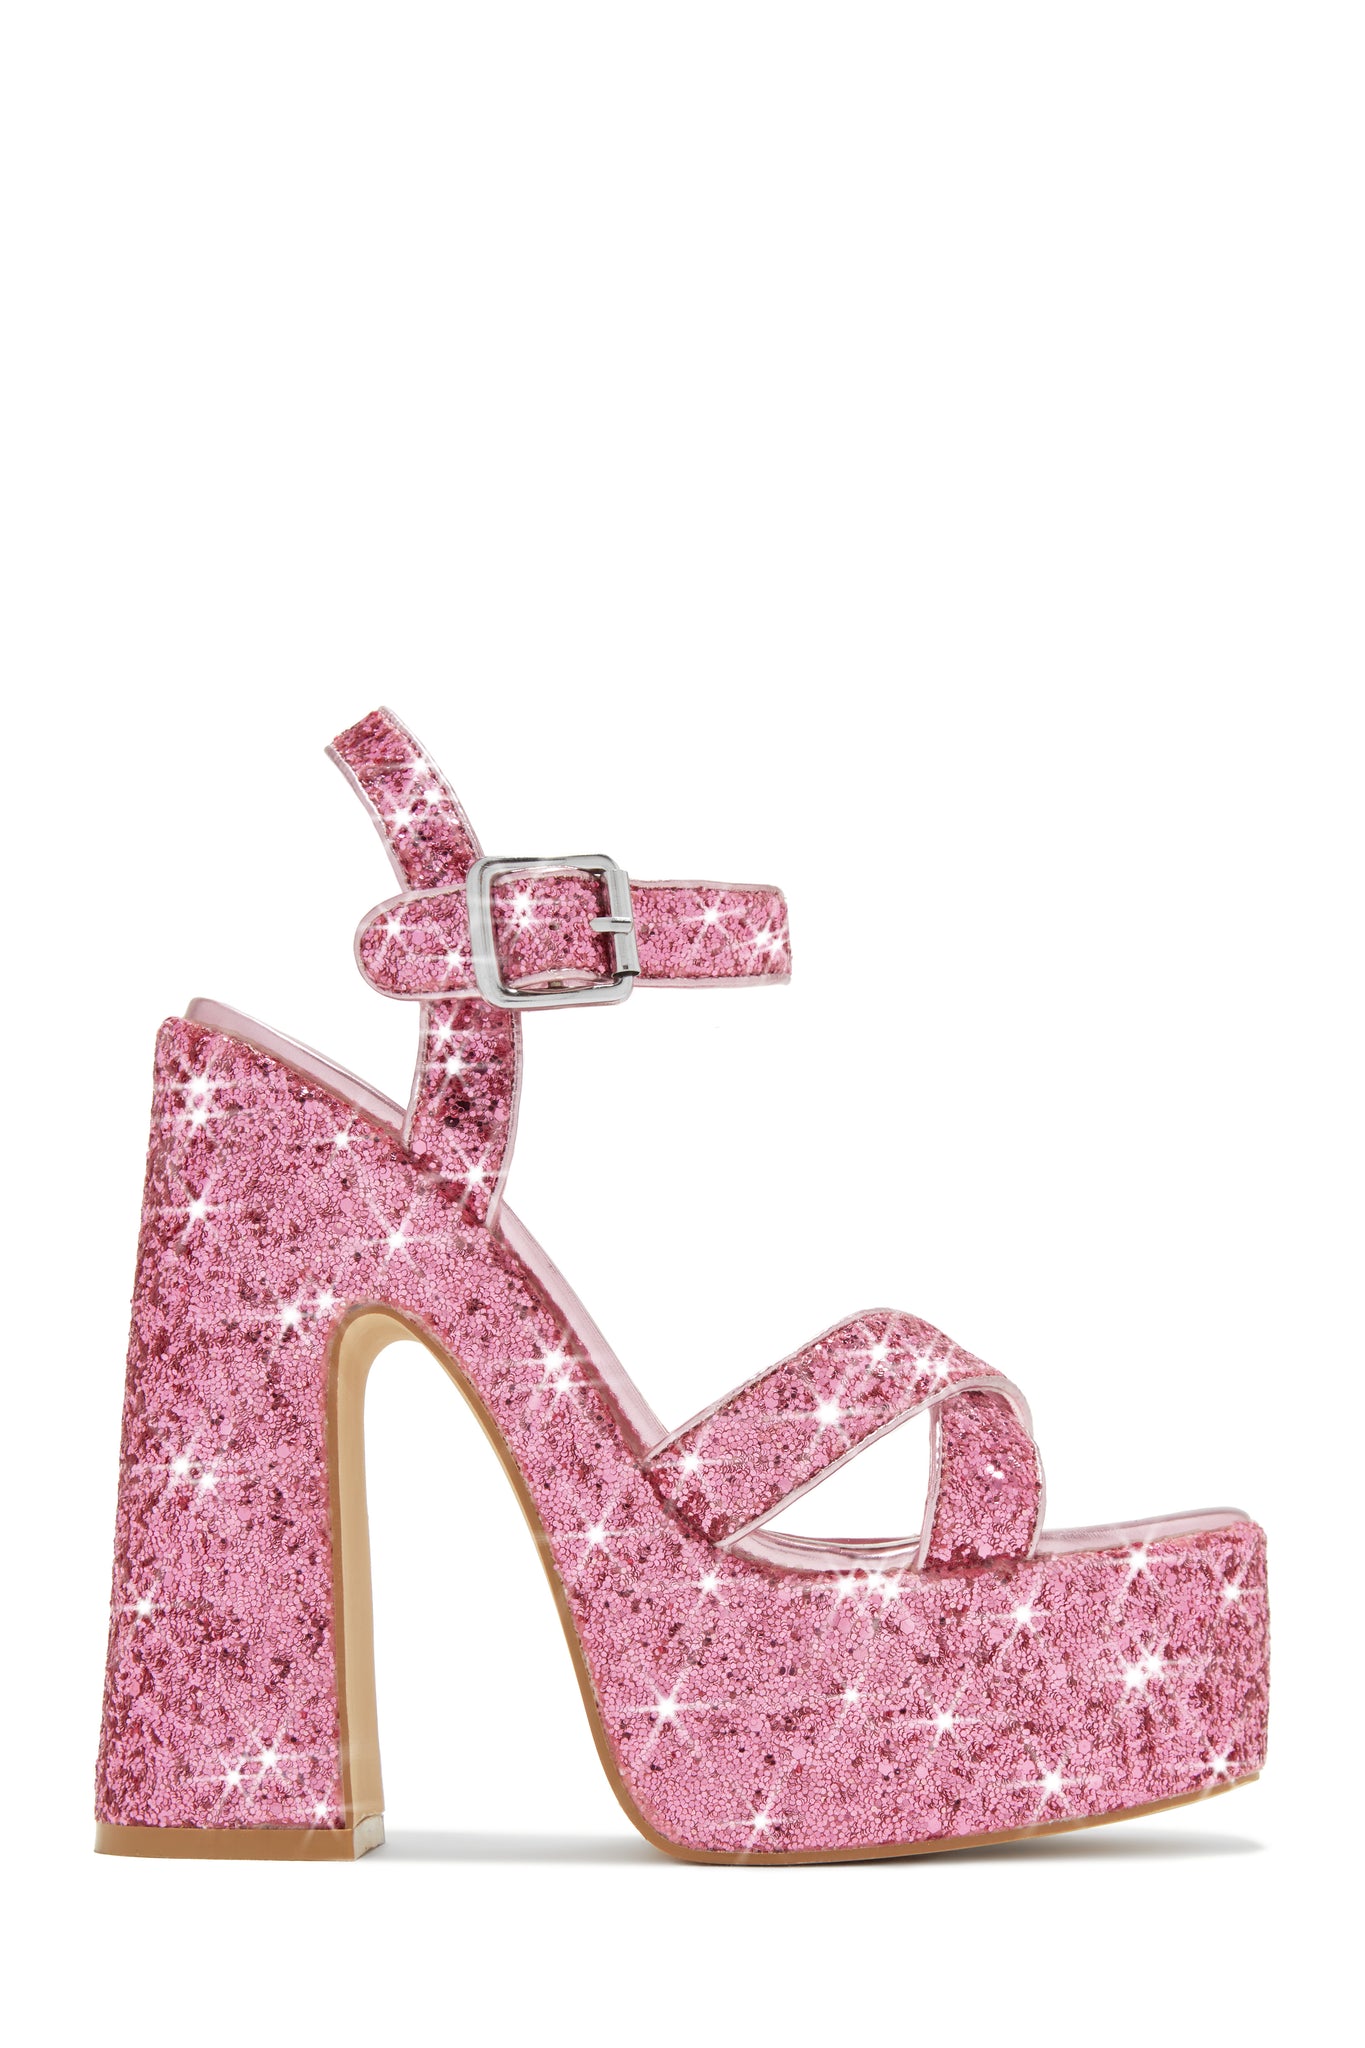 Fun Pink Glitter Heels - Ankle Strap Heels - Party Heels - $36.00 - Lulus